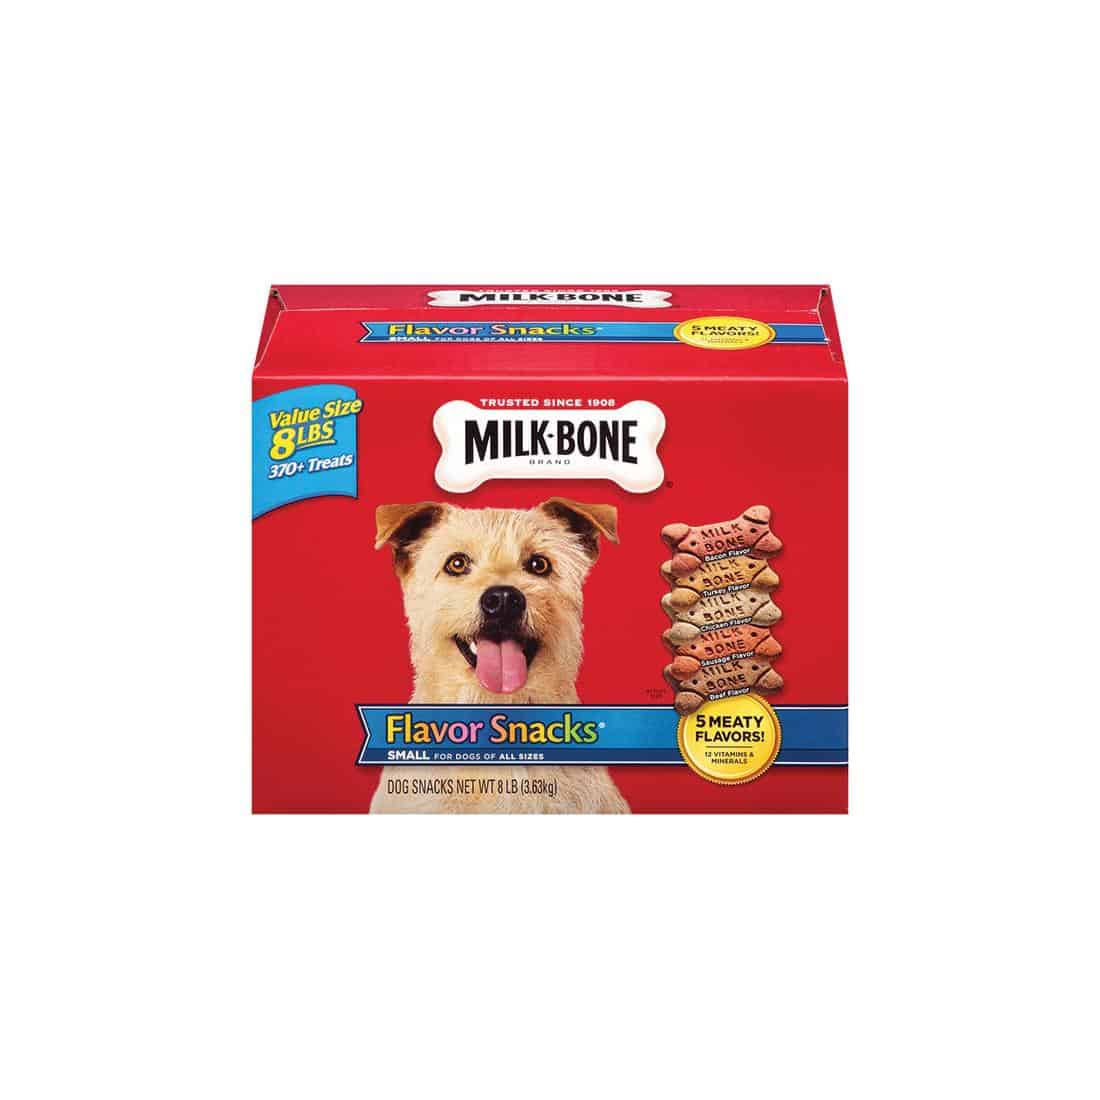 Milk-Bone Flavor Snacks Small Dog Biscuits, 8 lbs.